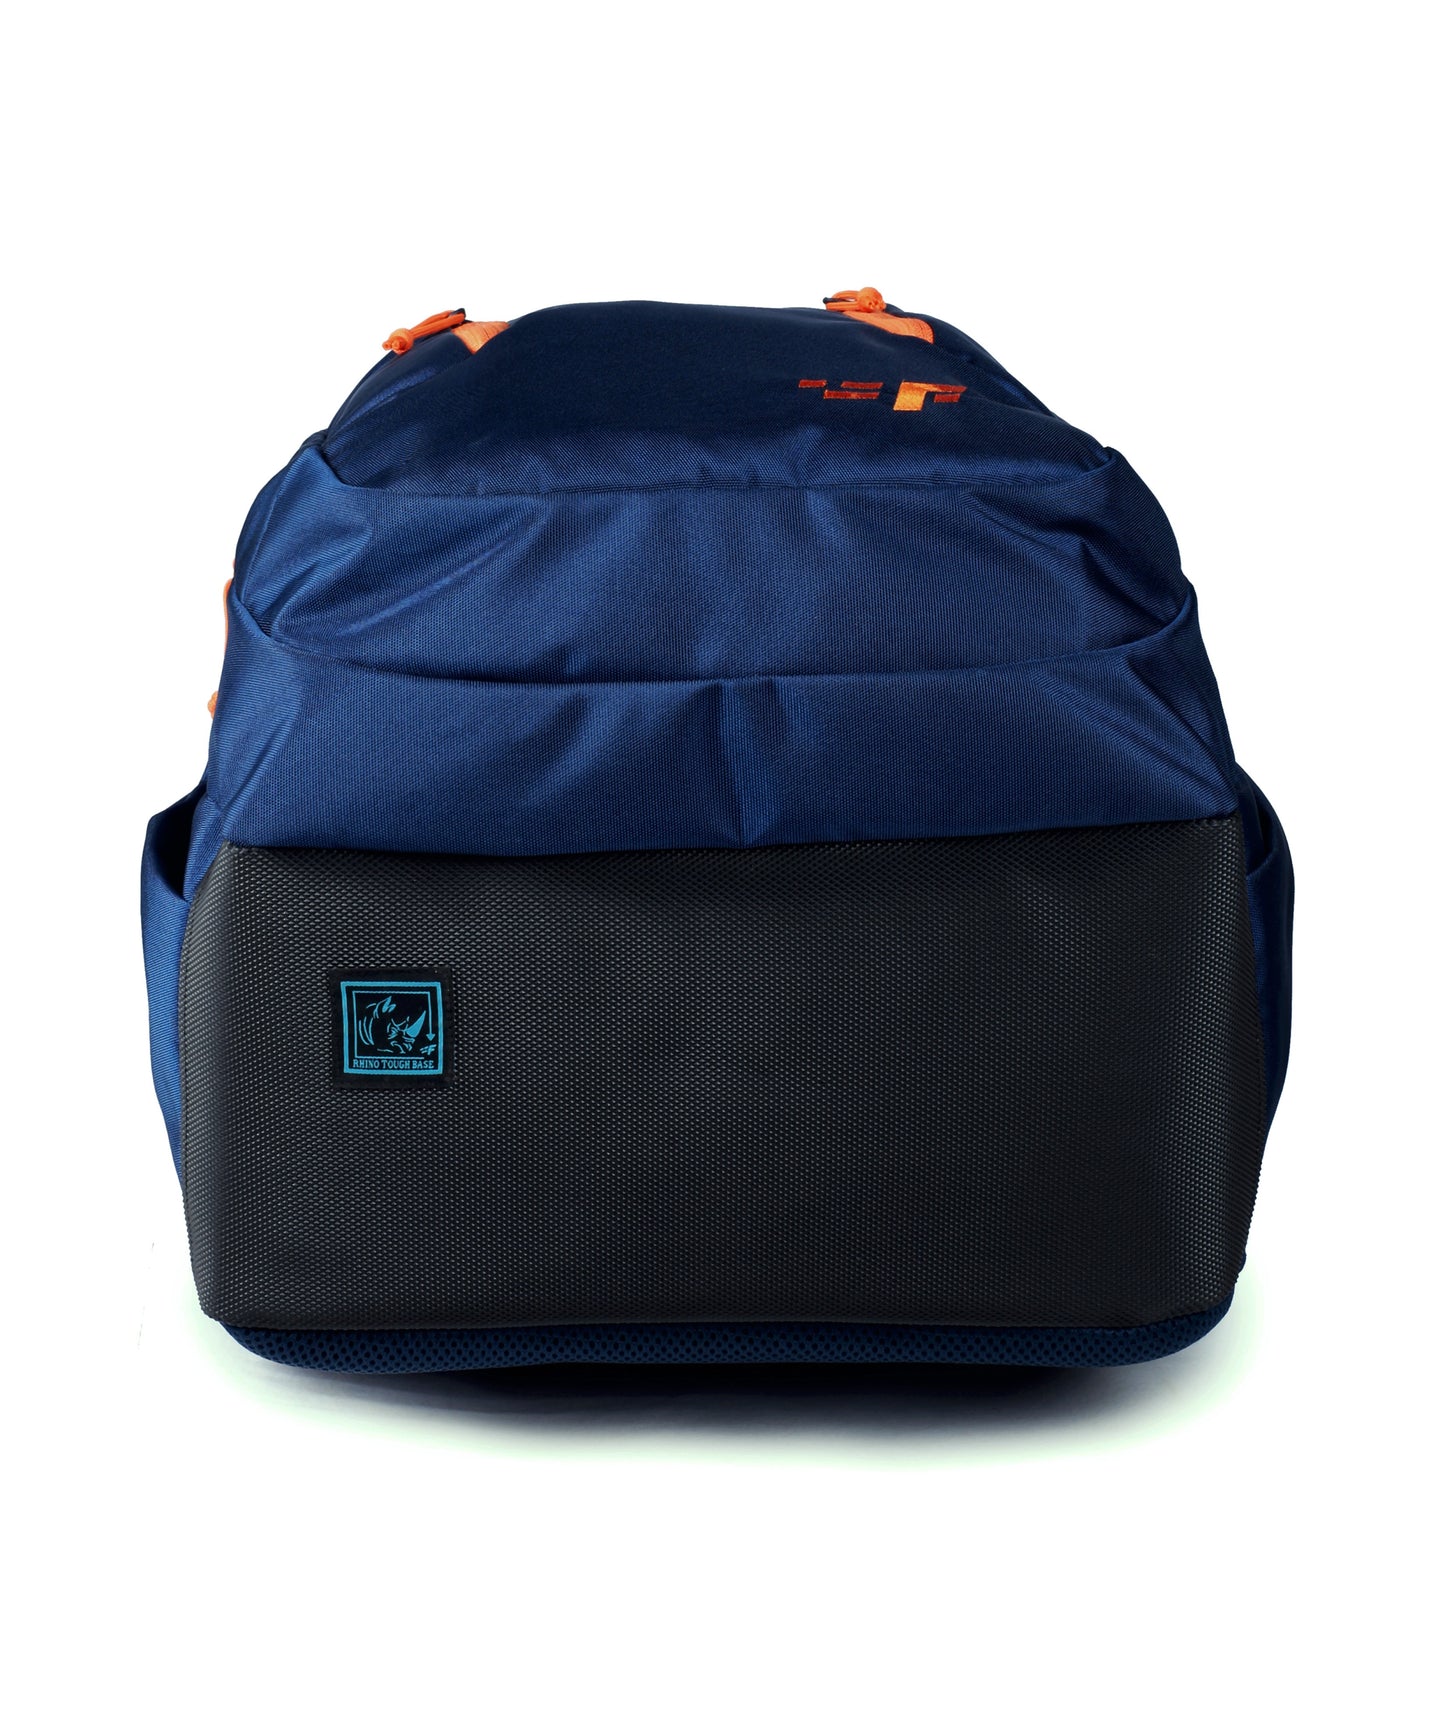 Amigo 37L Guc Navy Orange Backpack